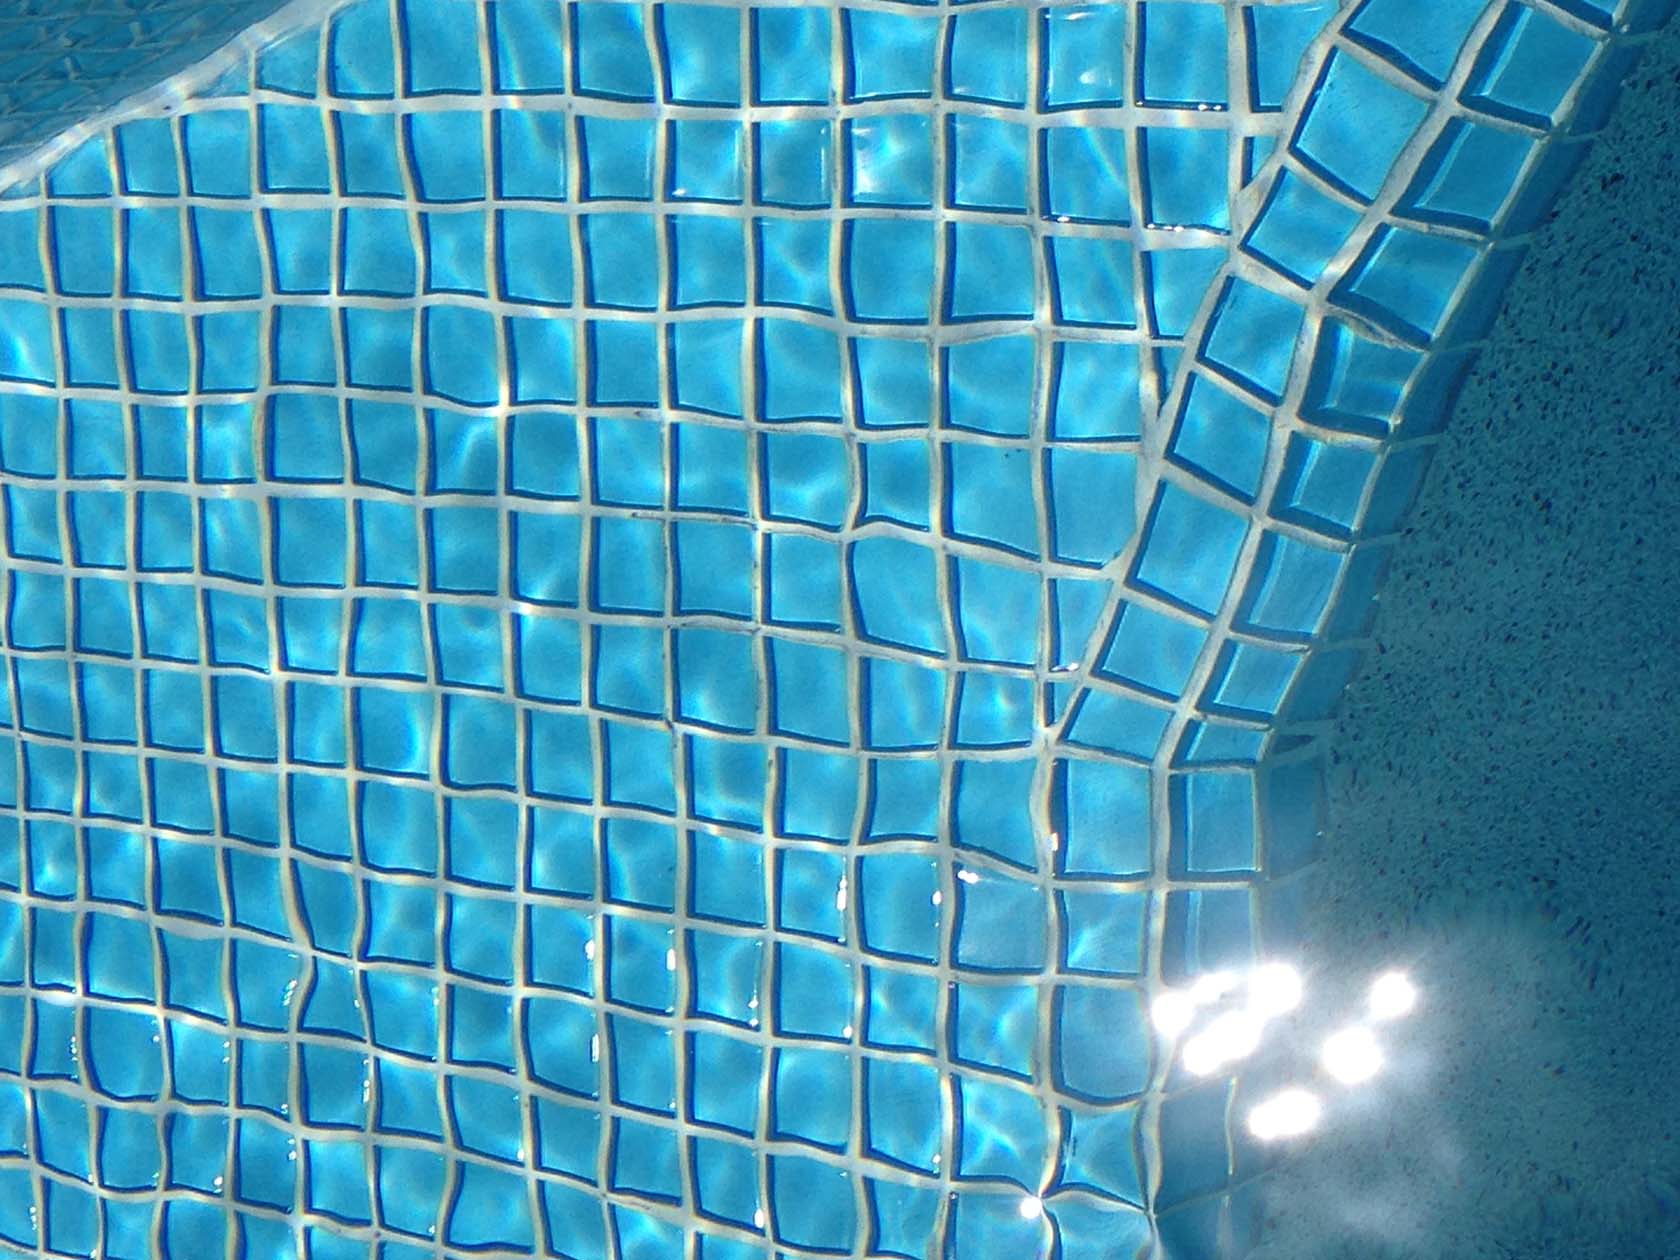 GCR210 Sky Blue Crystal fully tiled pool